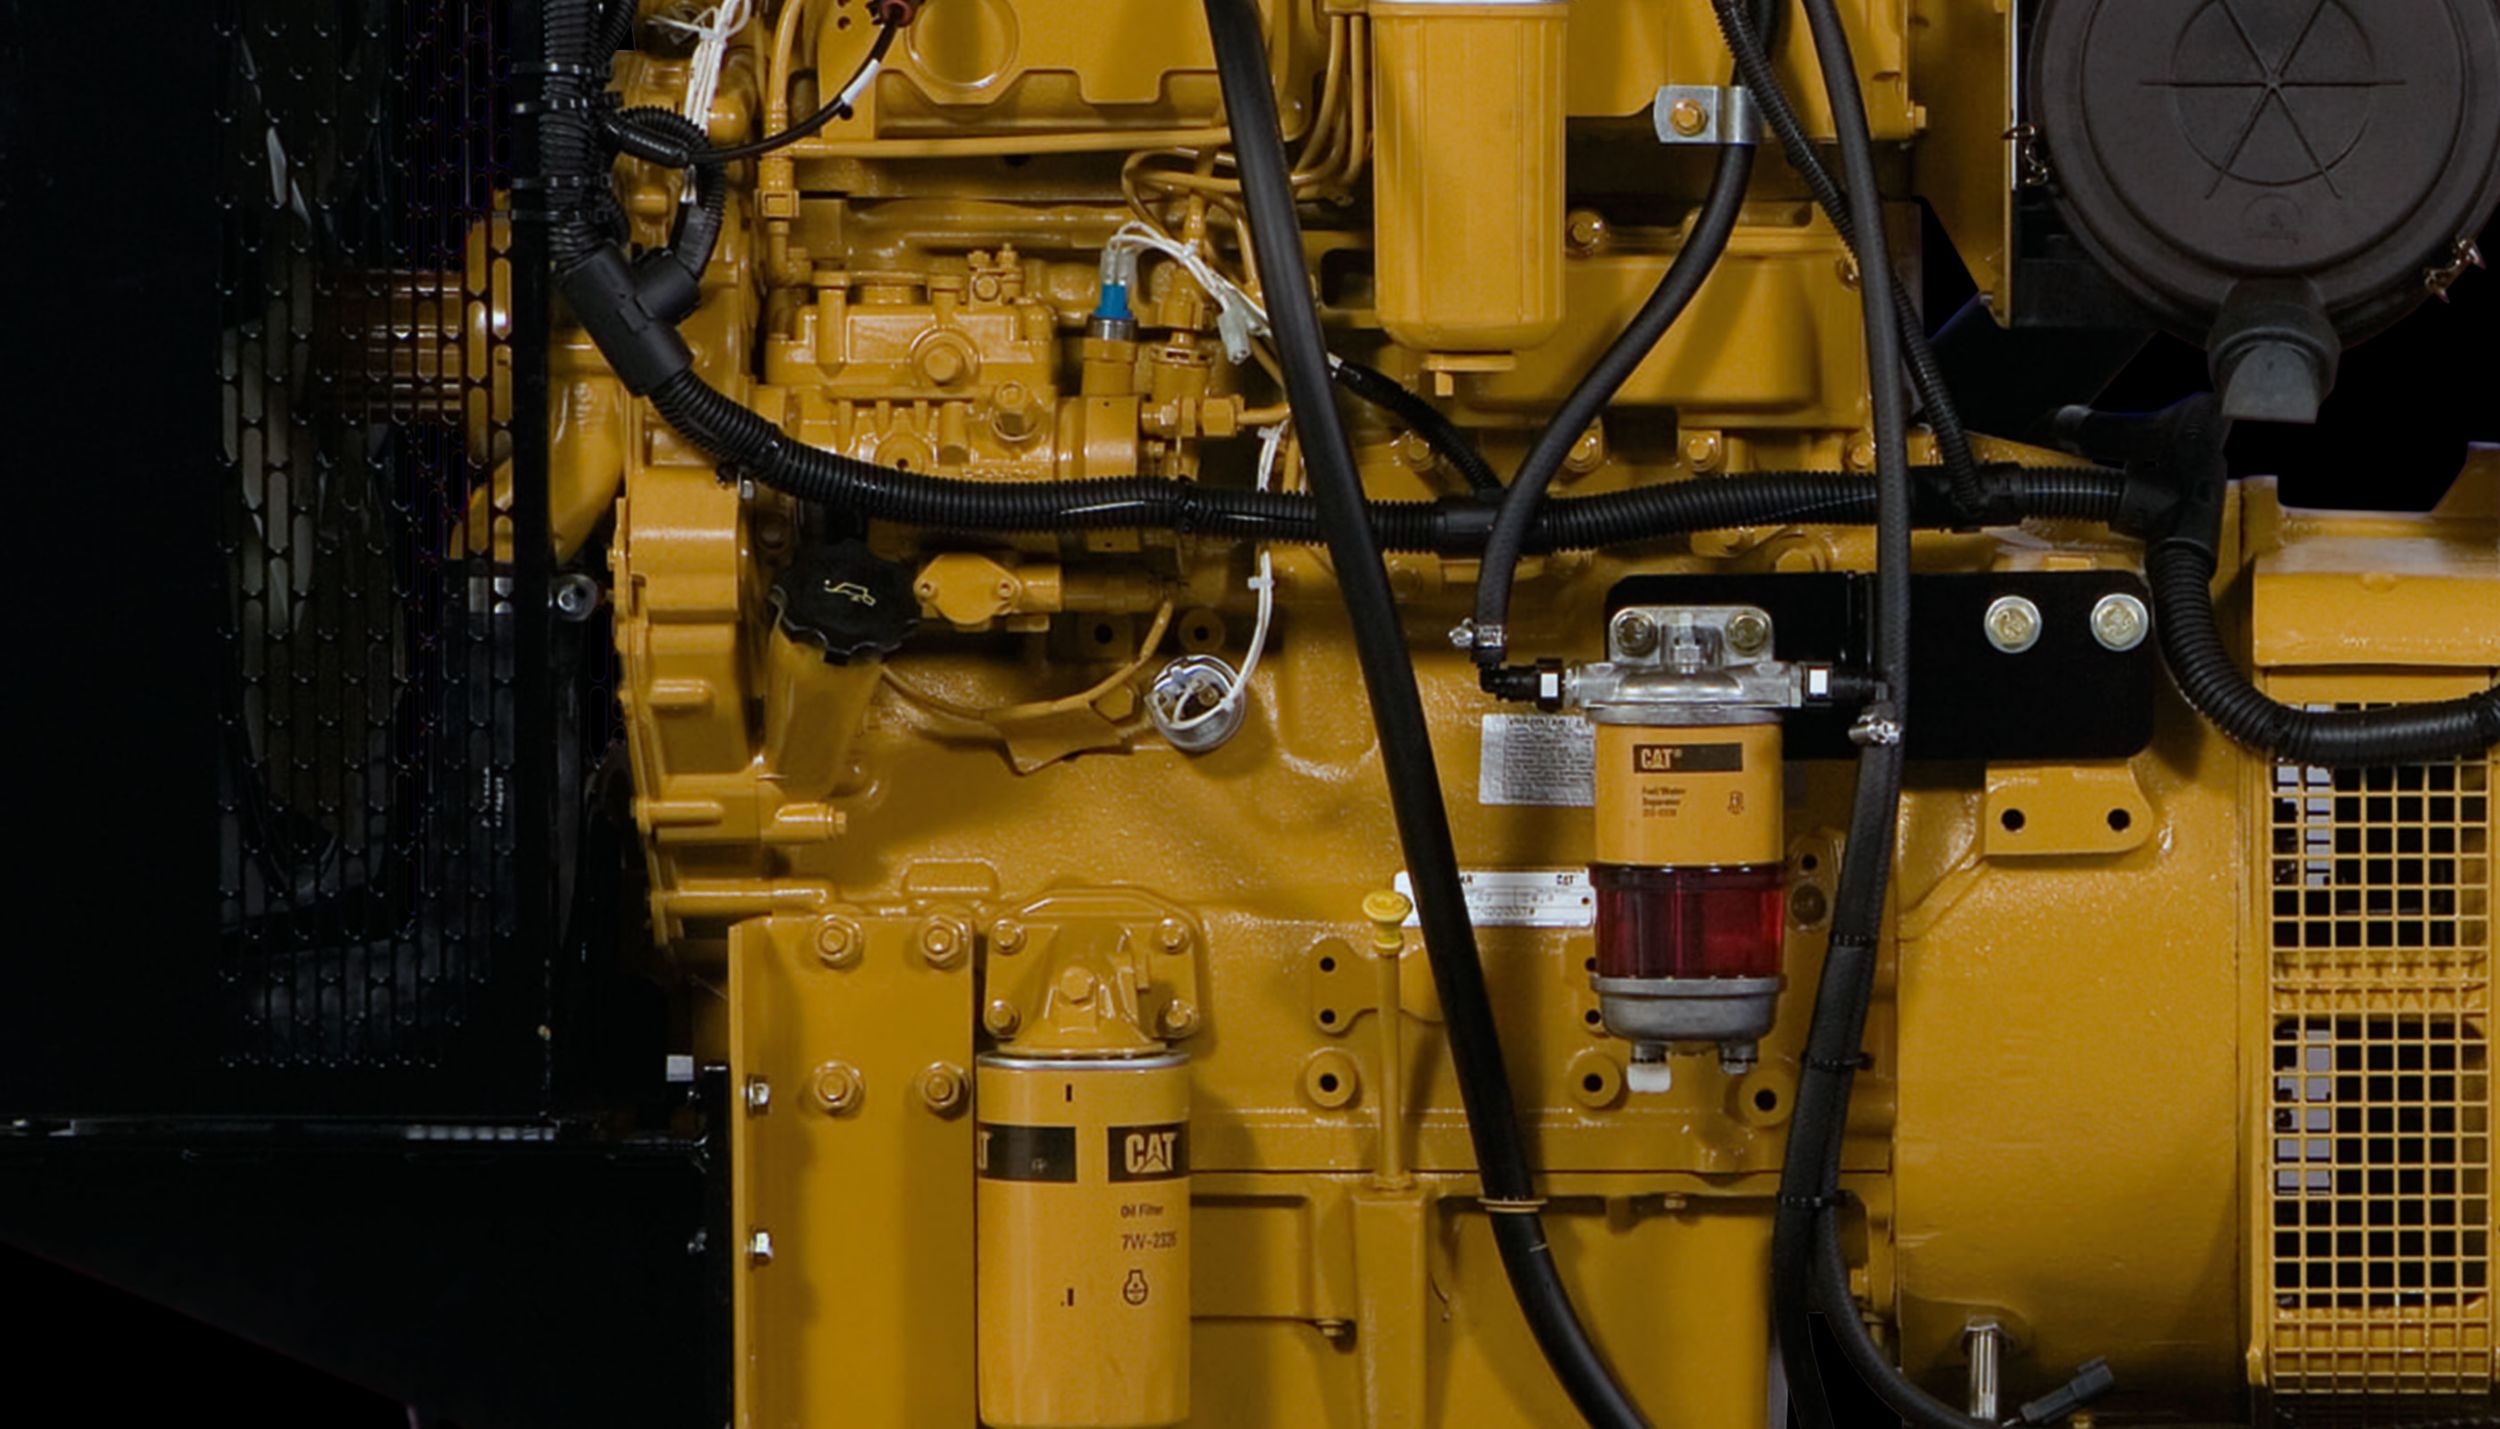 Cat C13 (60 HZ) 320400 kW Diesel Generator Caterpillar